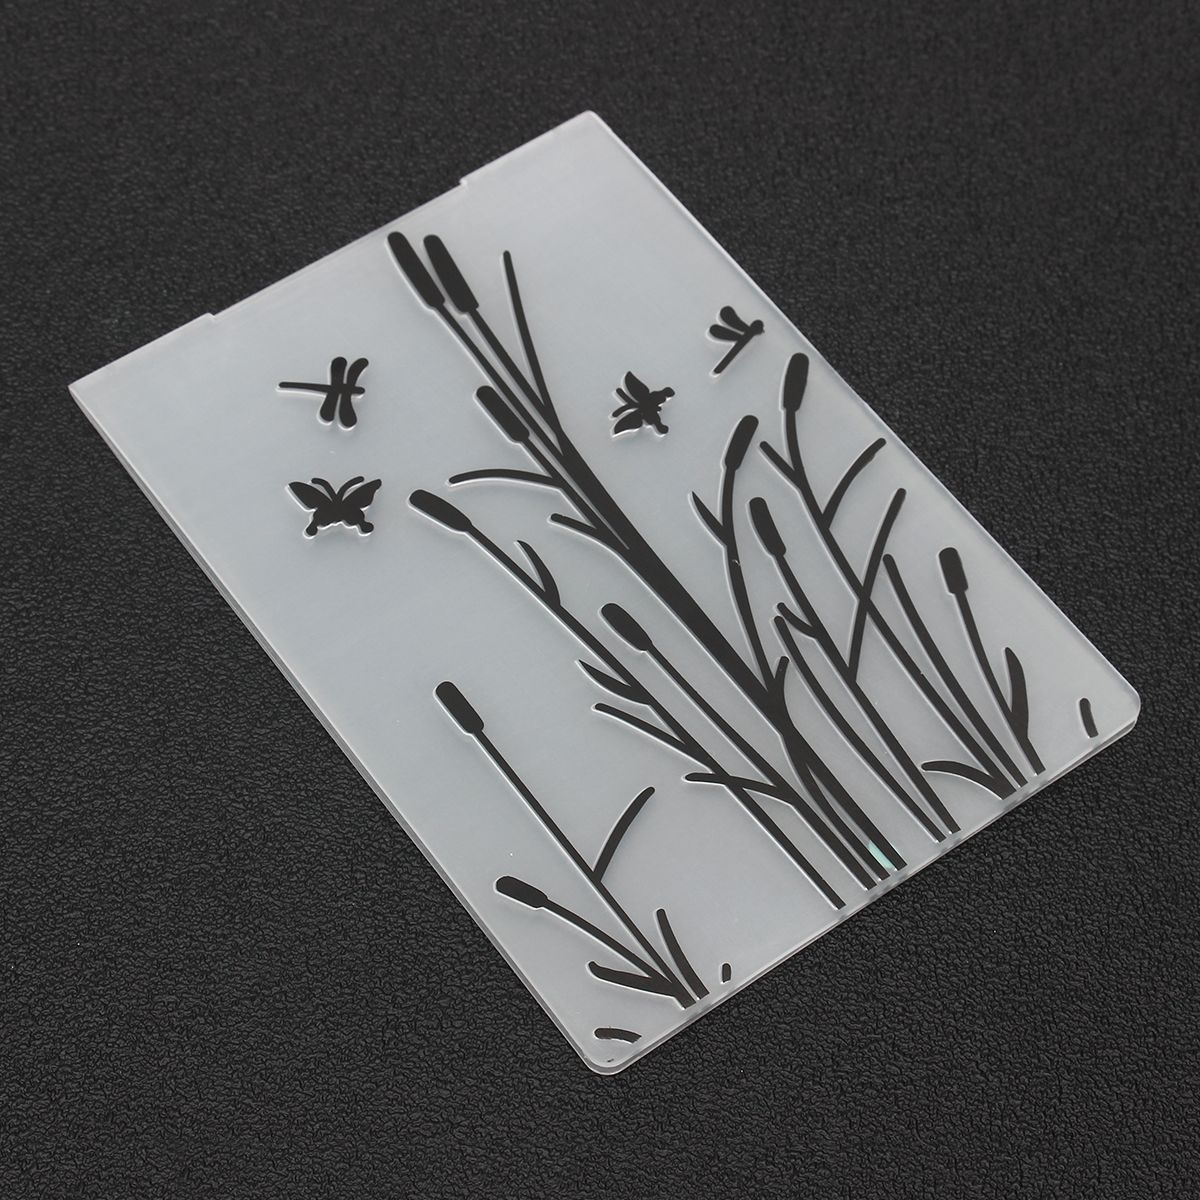 Butterfly-Plastic-Embossing-Folder-Template-Scrapbooking-Album-Card-Cutting-Dies-15x10cm-1262306